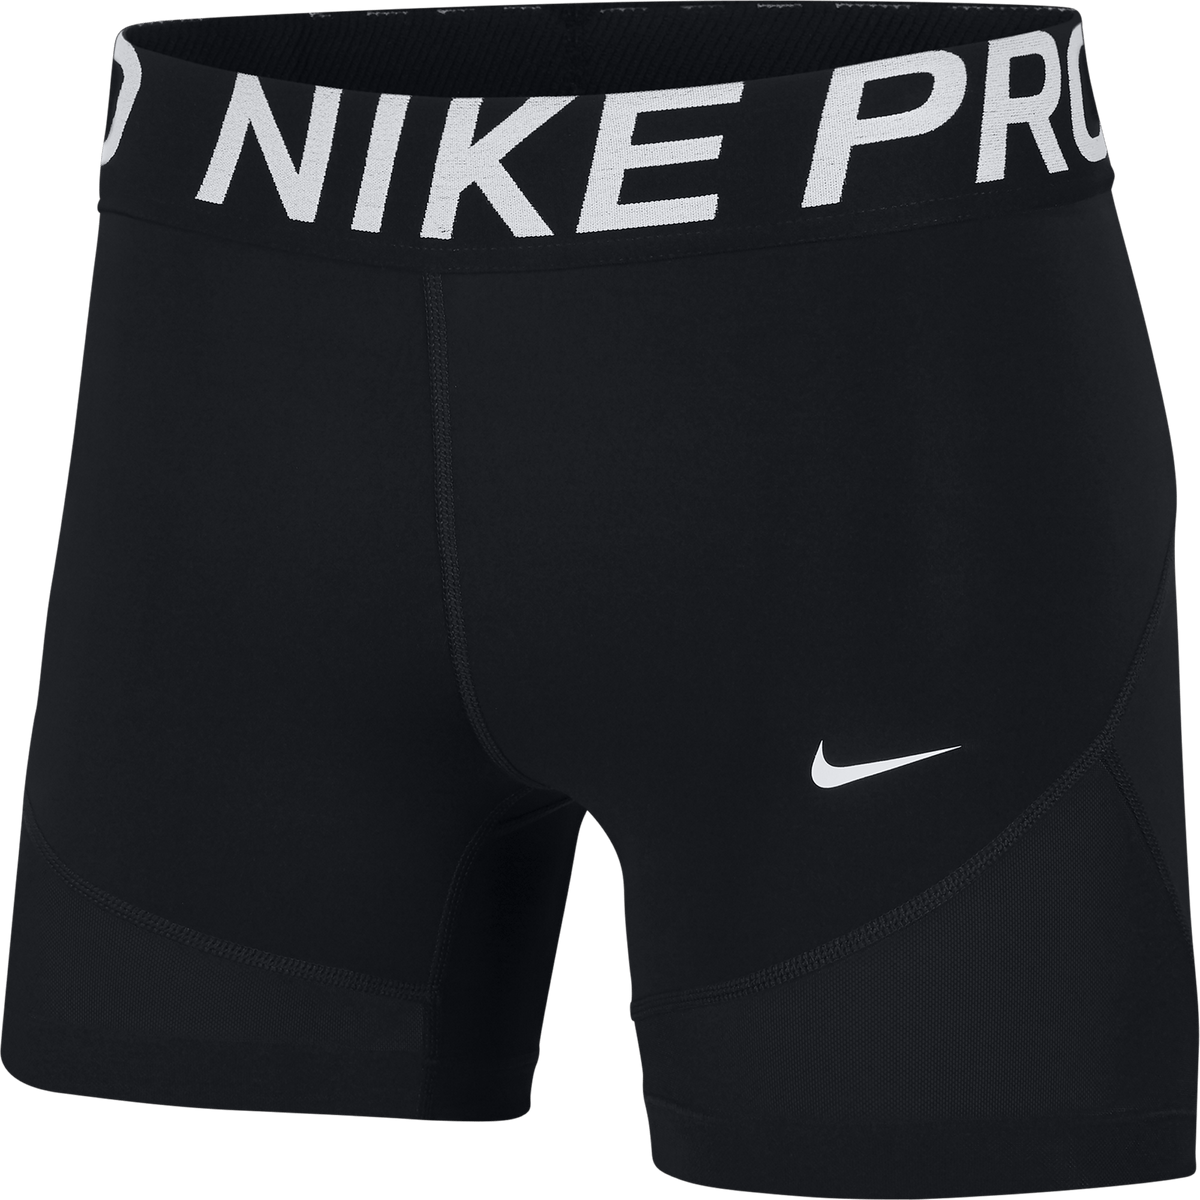 nike pro women's 13cm shorts